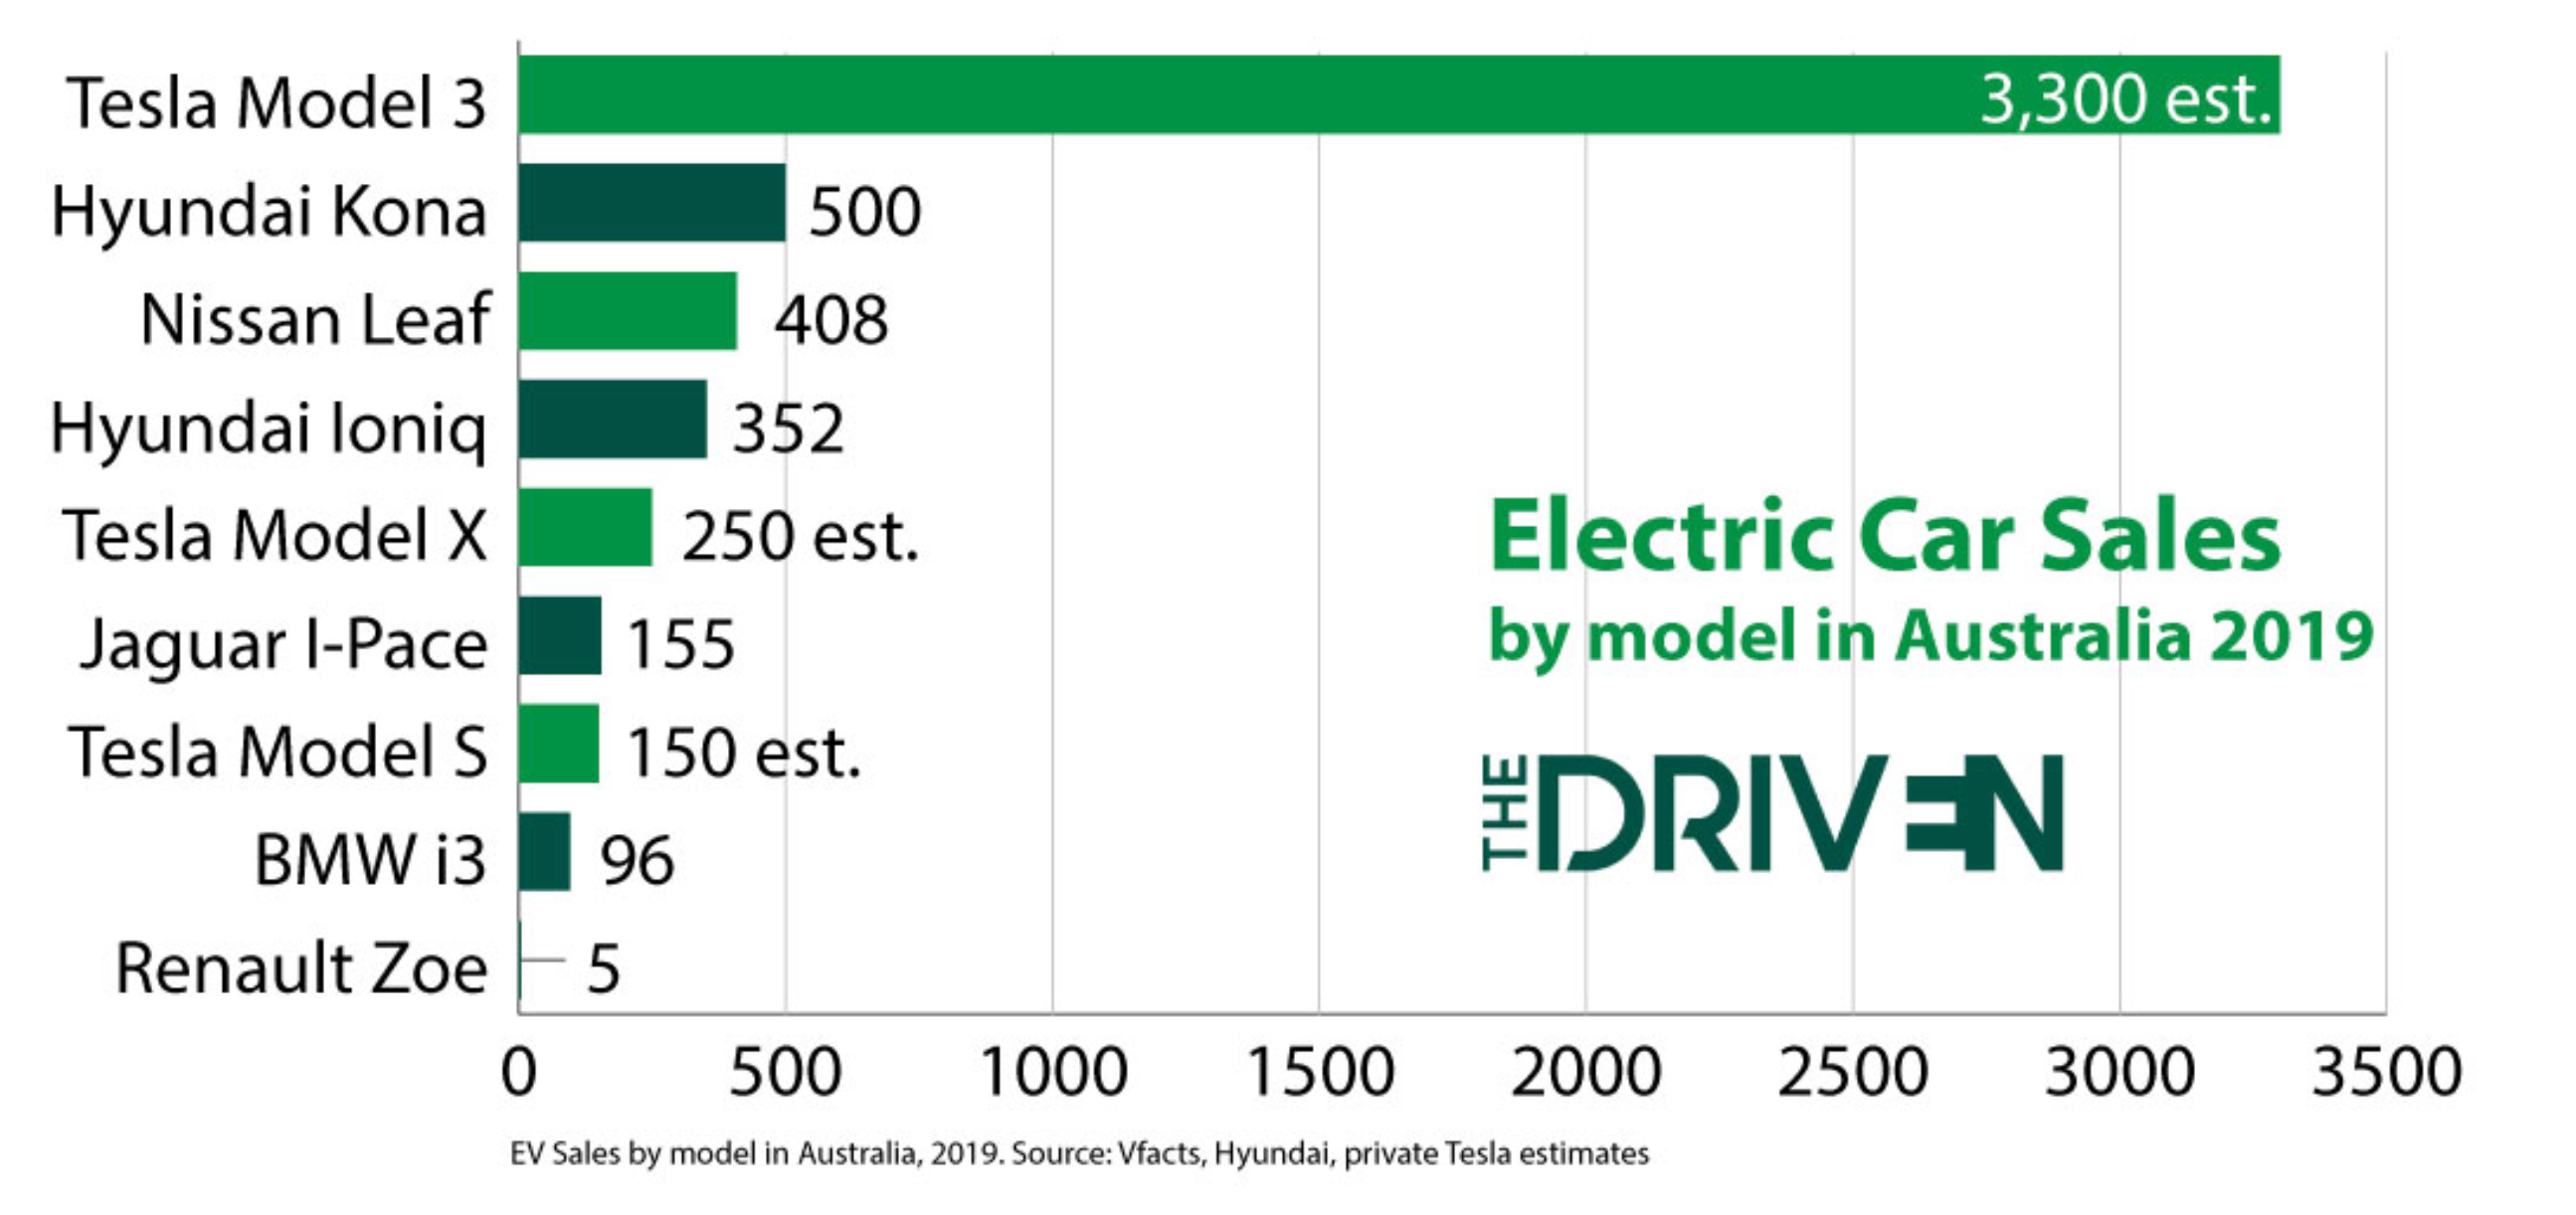 The-Driven-Tesla-Modell-3-Sales-Australien